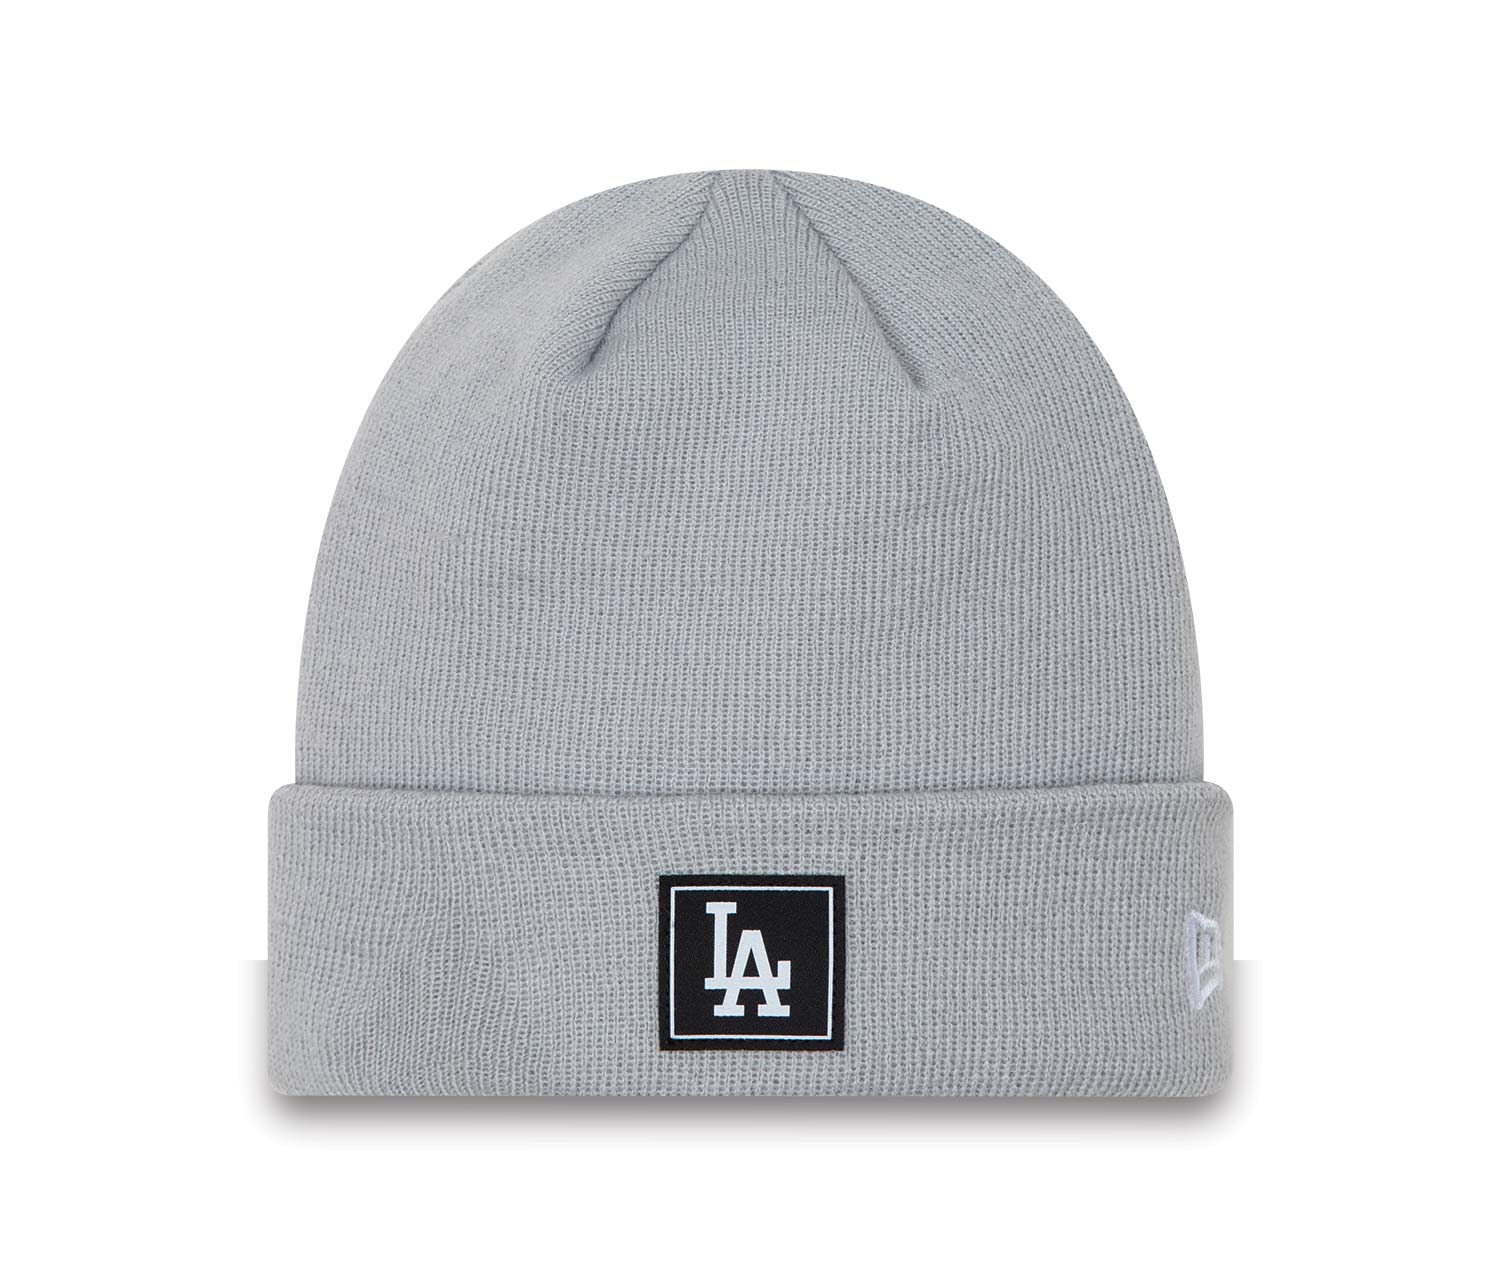 LA Dodgers Team Cuff Grey Beanie Hat